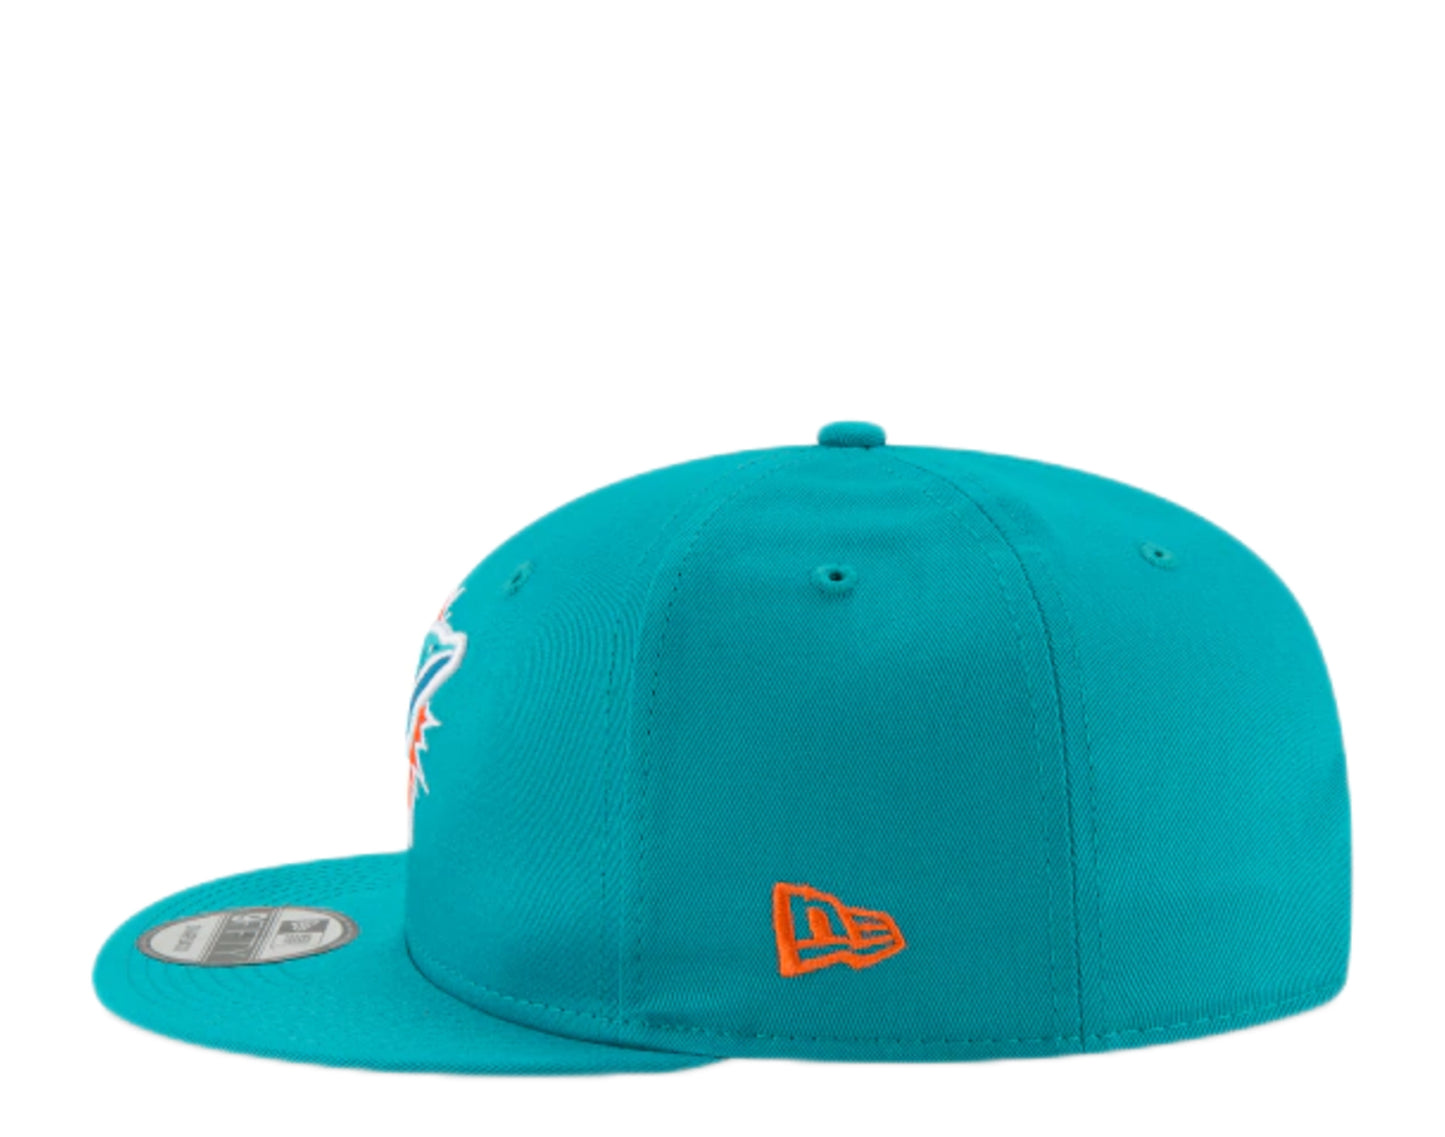 New Era 9Fifty NFL Miami Dolphins Basic Teal Aqua/Orange Snapback Hat 11872981